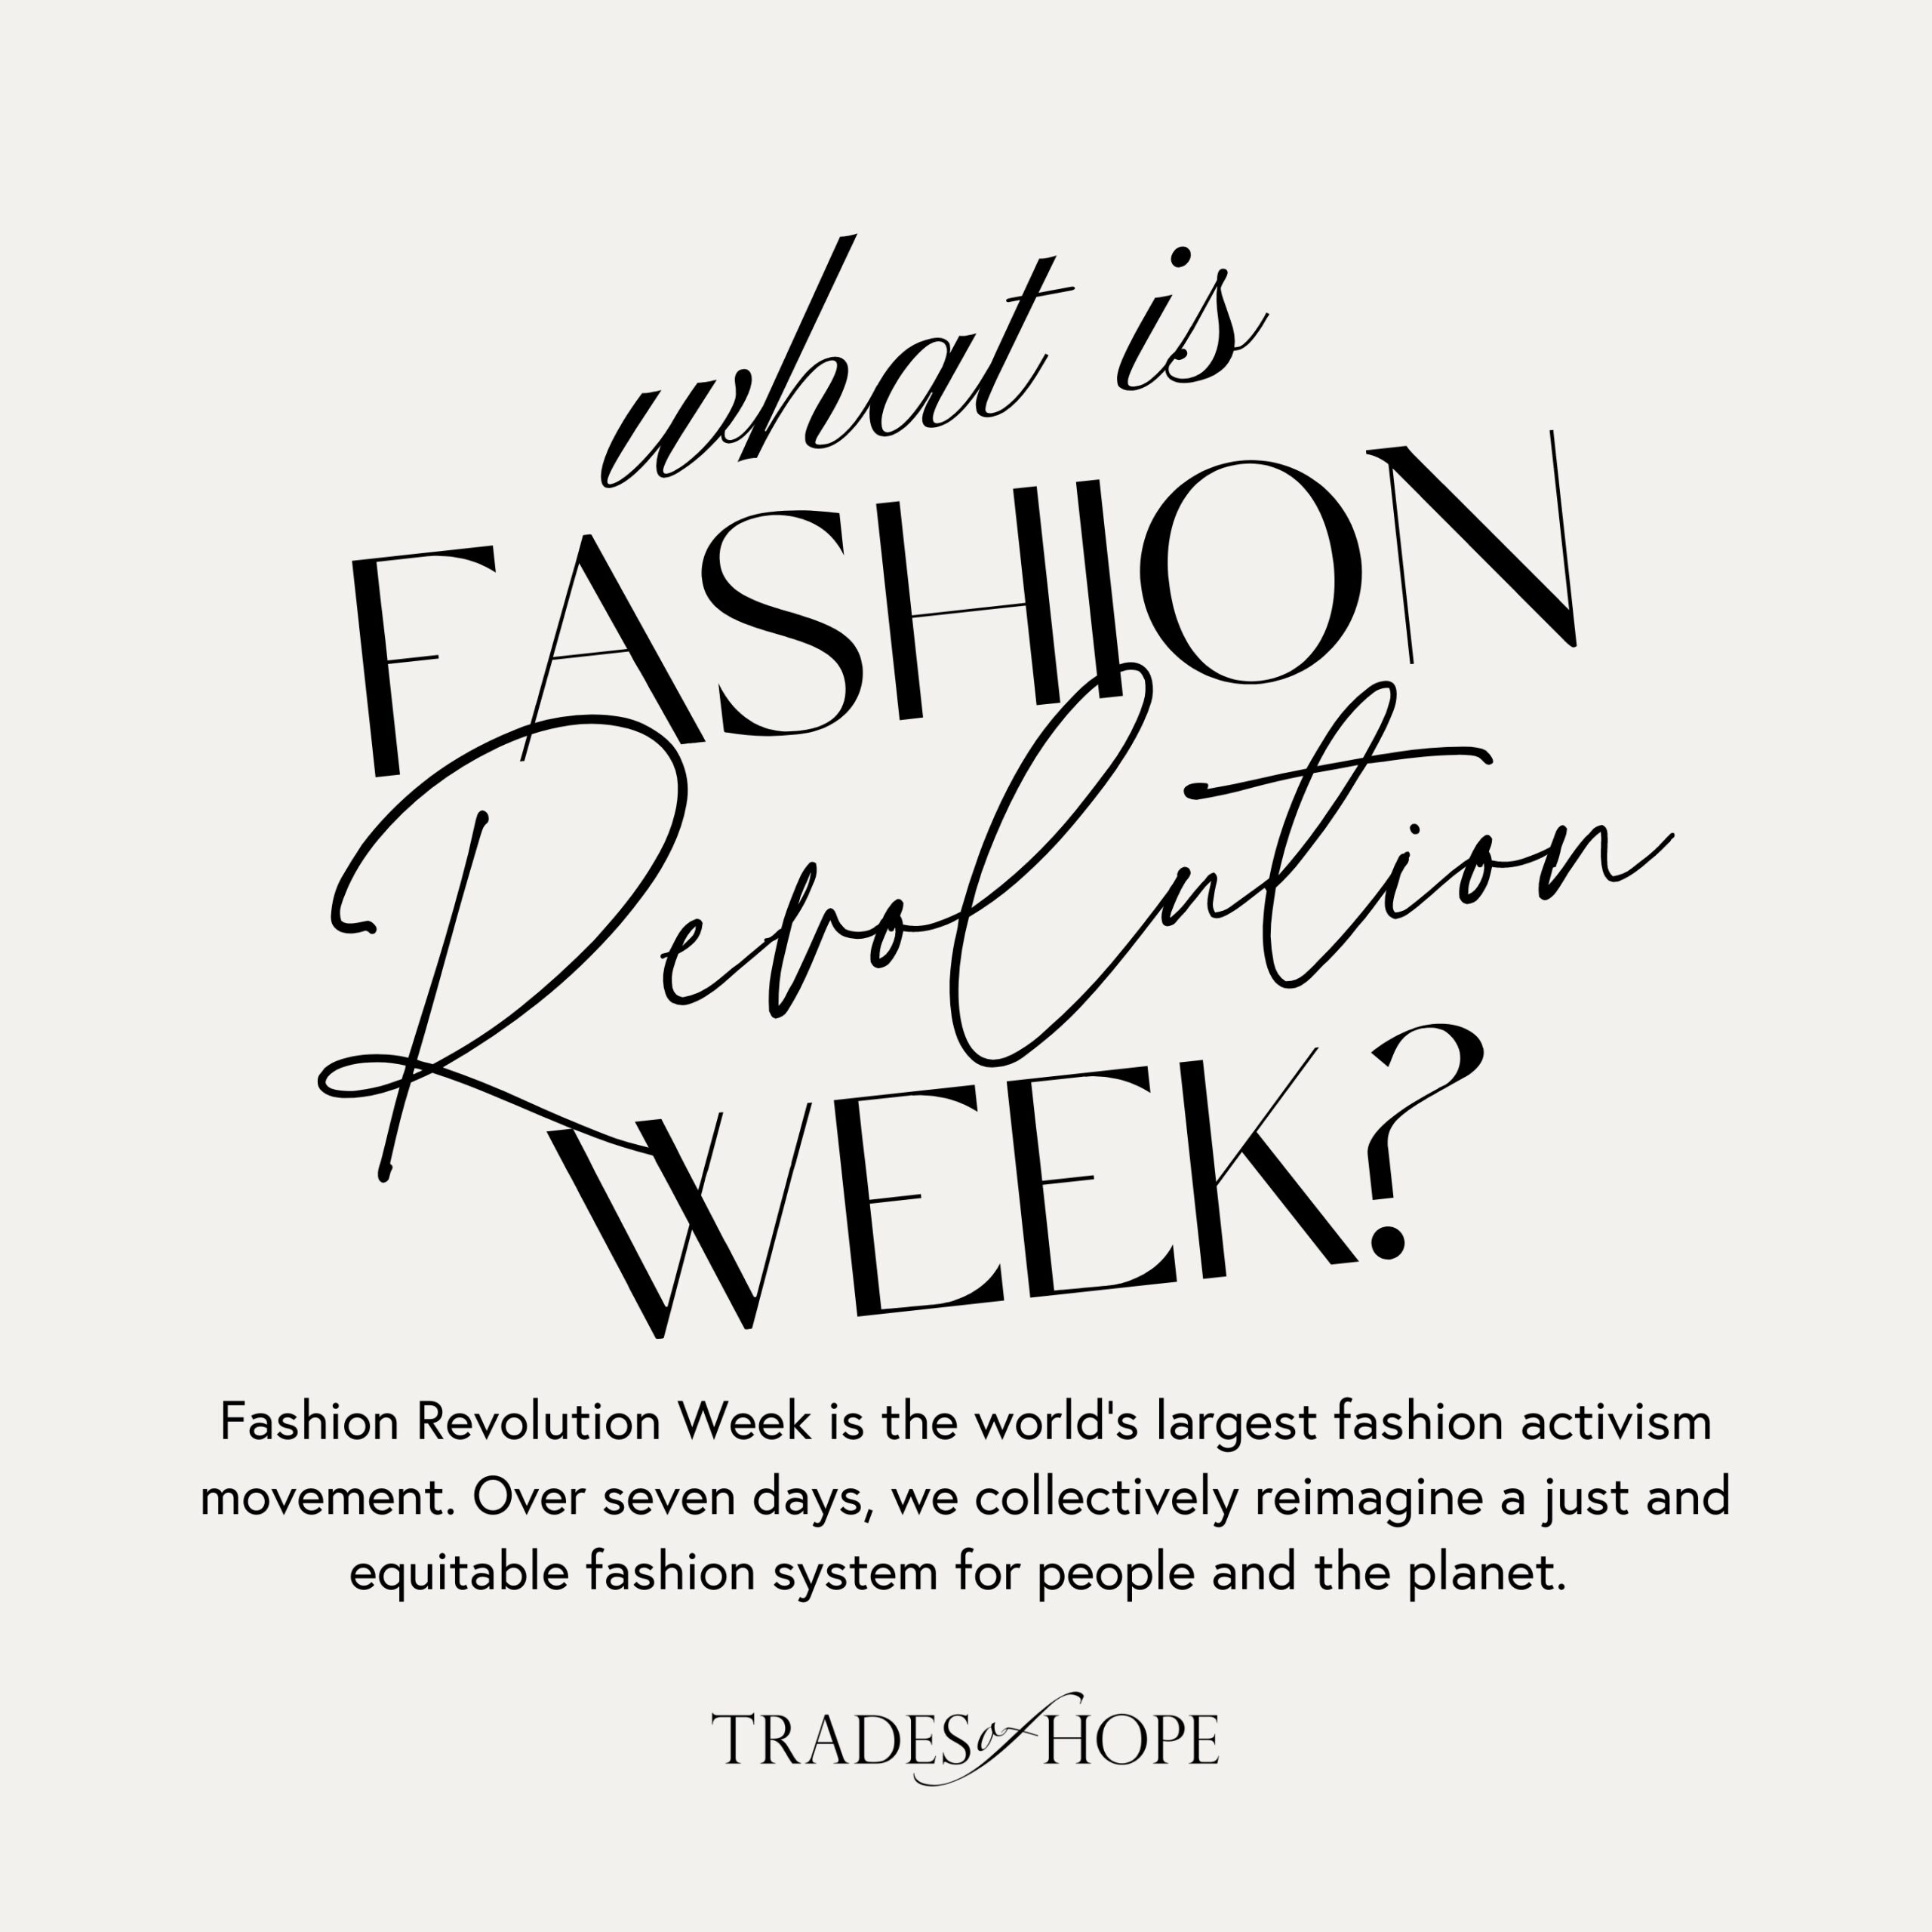 Fashion Revolution Week Graphic - What is Fashion Revolution Week?